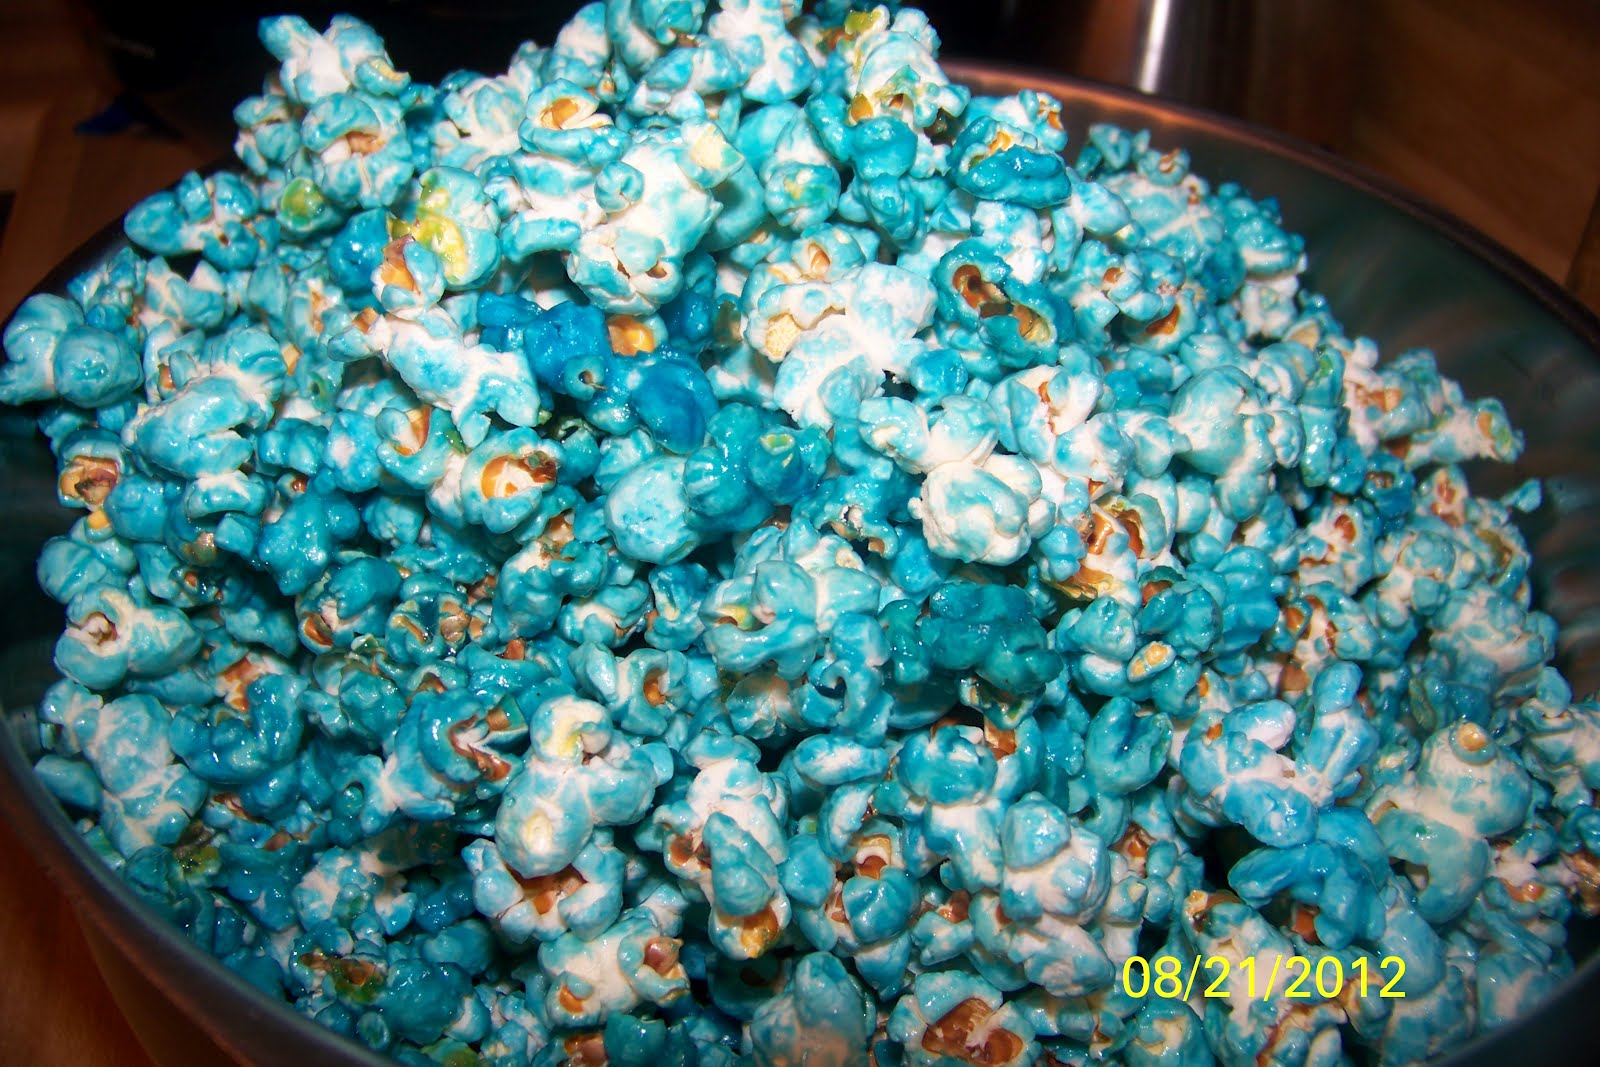 Connor's Cooking Sugar Crunch Popcorn aka Blue Popcorn